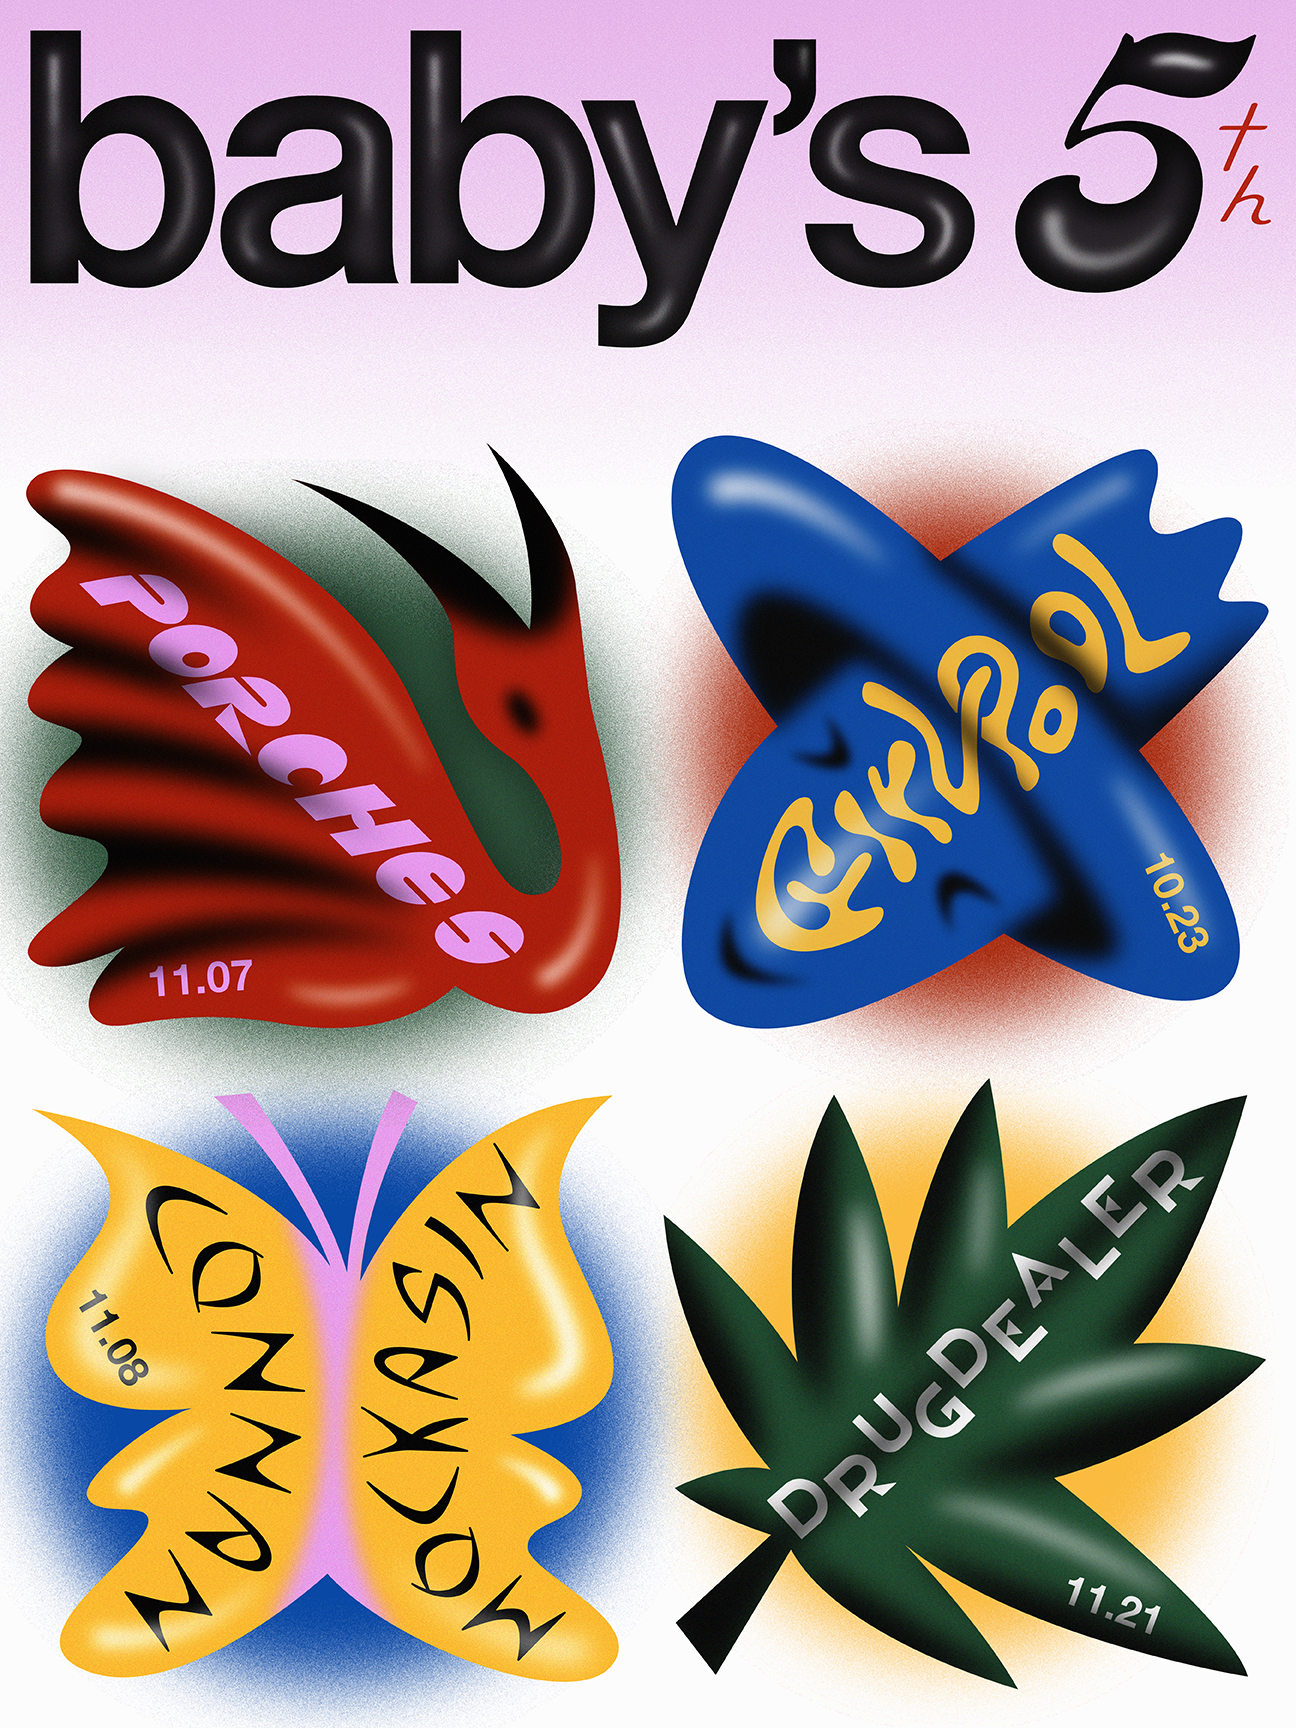 babys5 (Hi res poster)